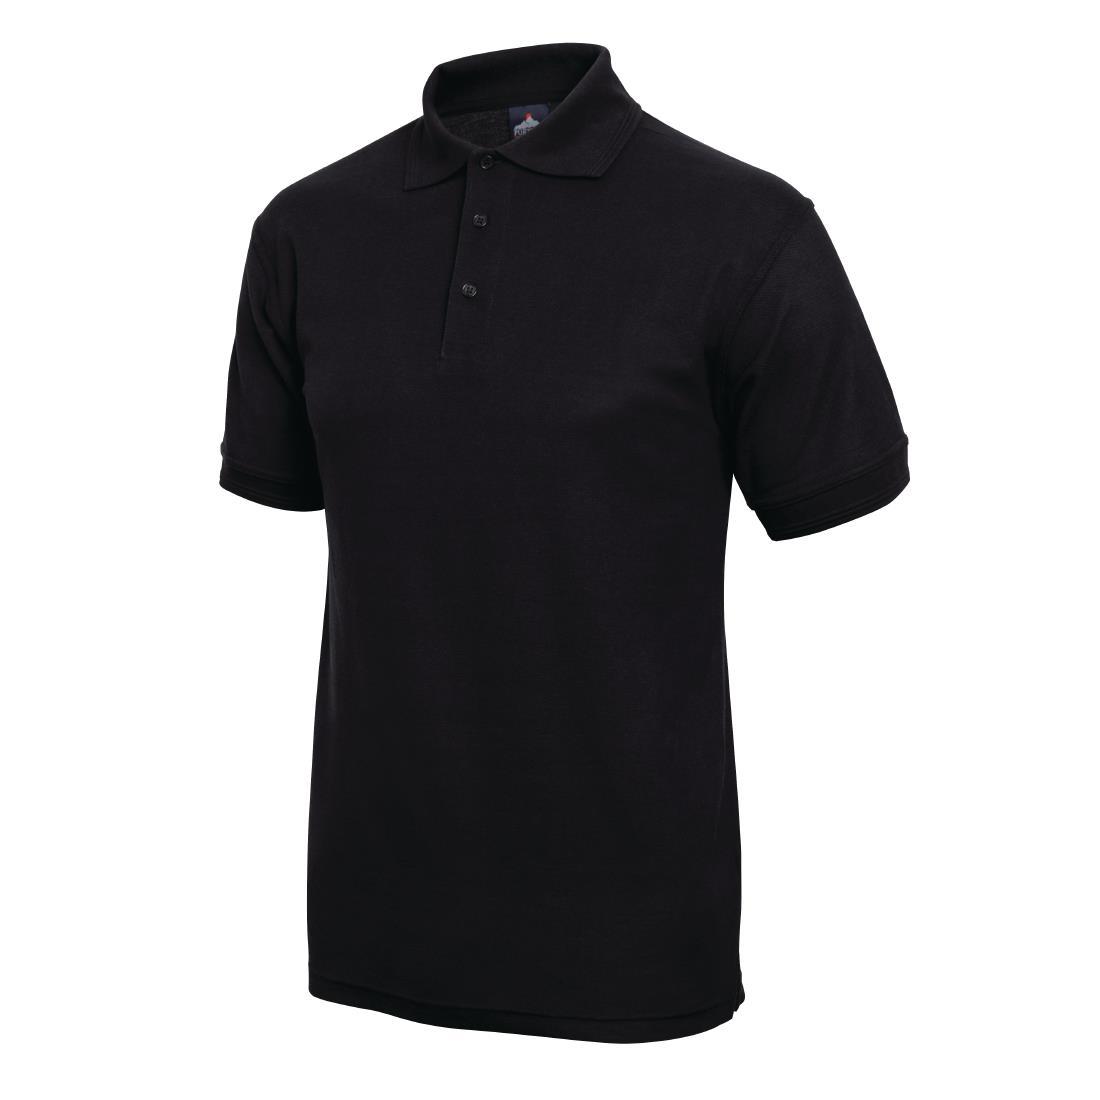 Unisex Polo Shirt Black M - A735-M  - 2